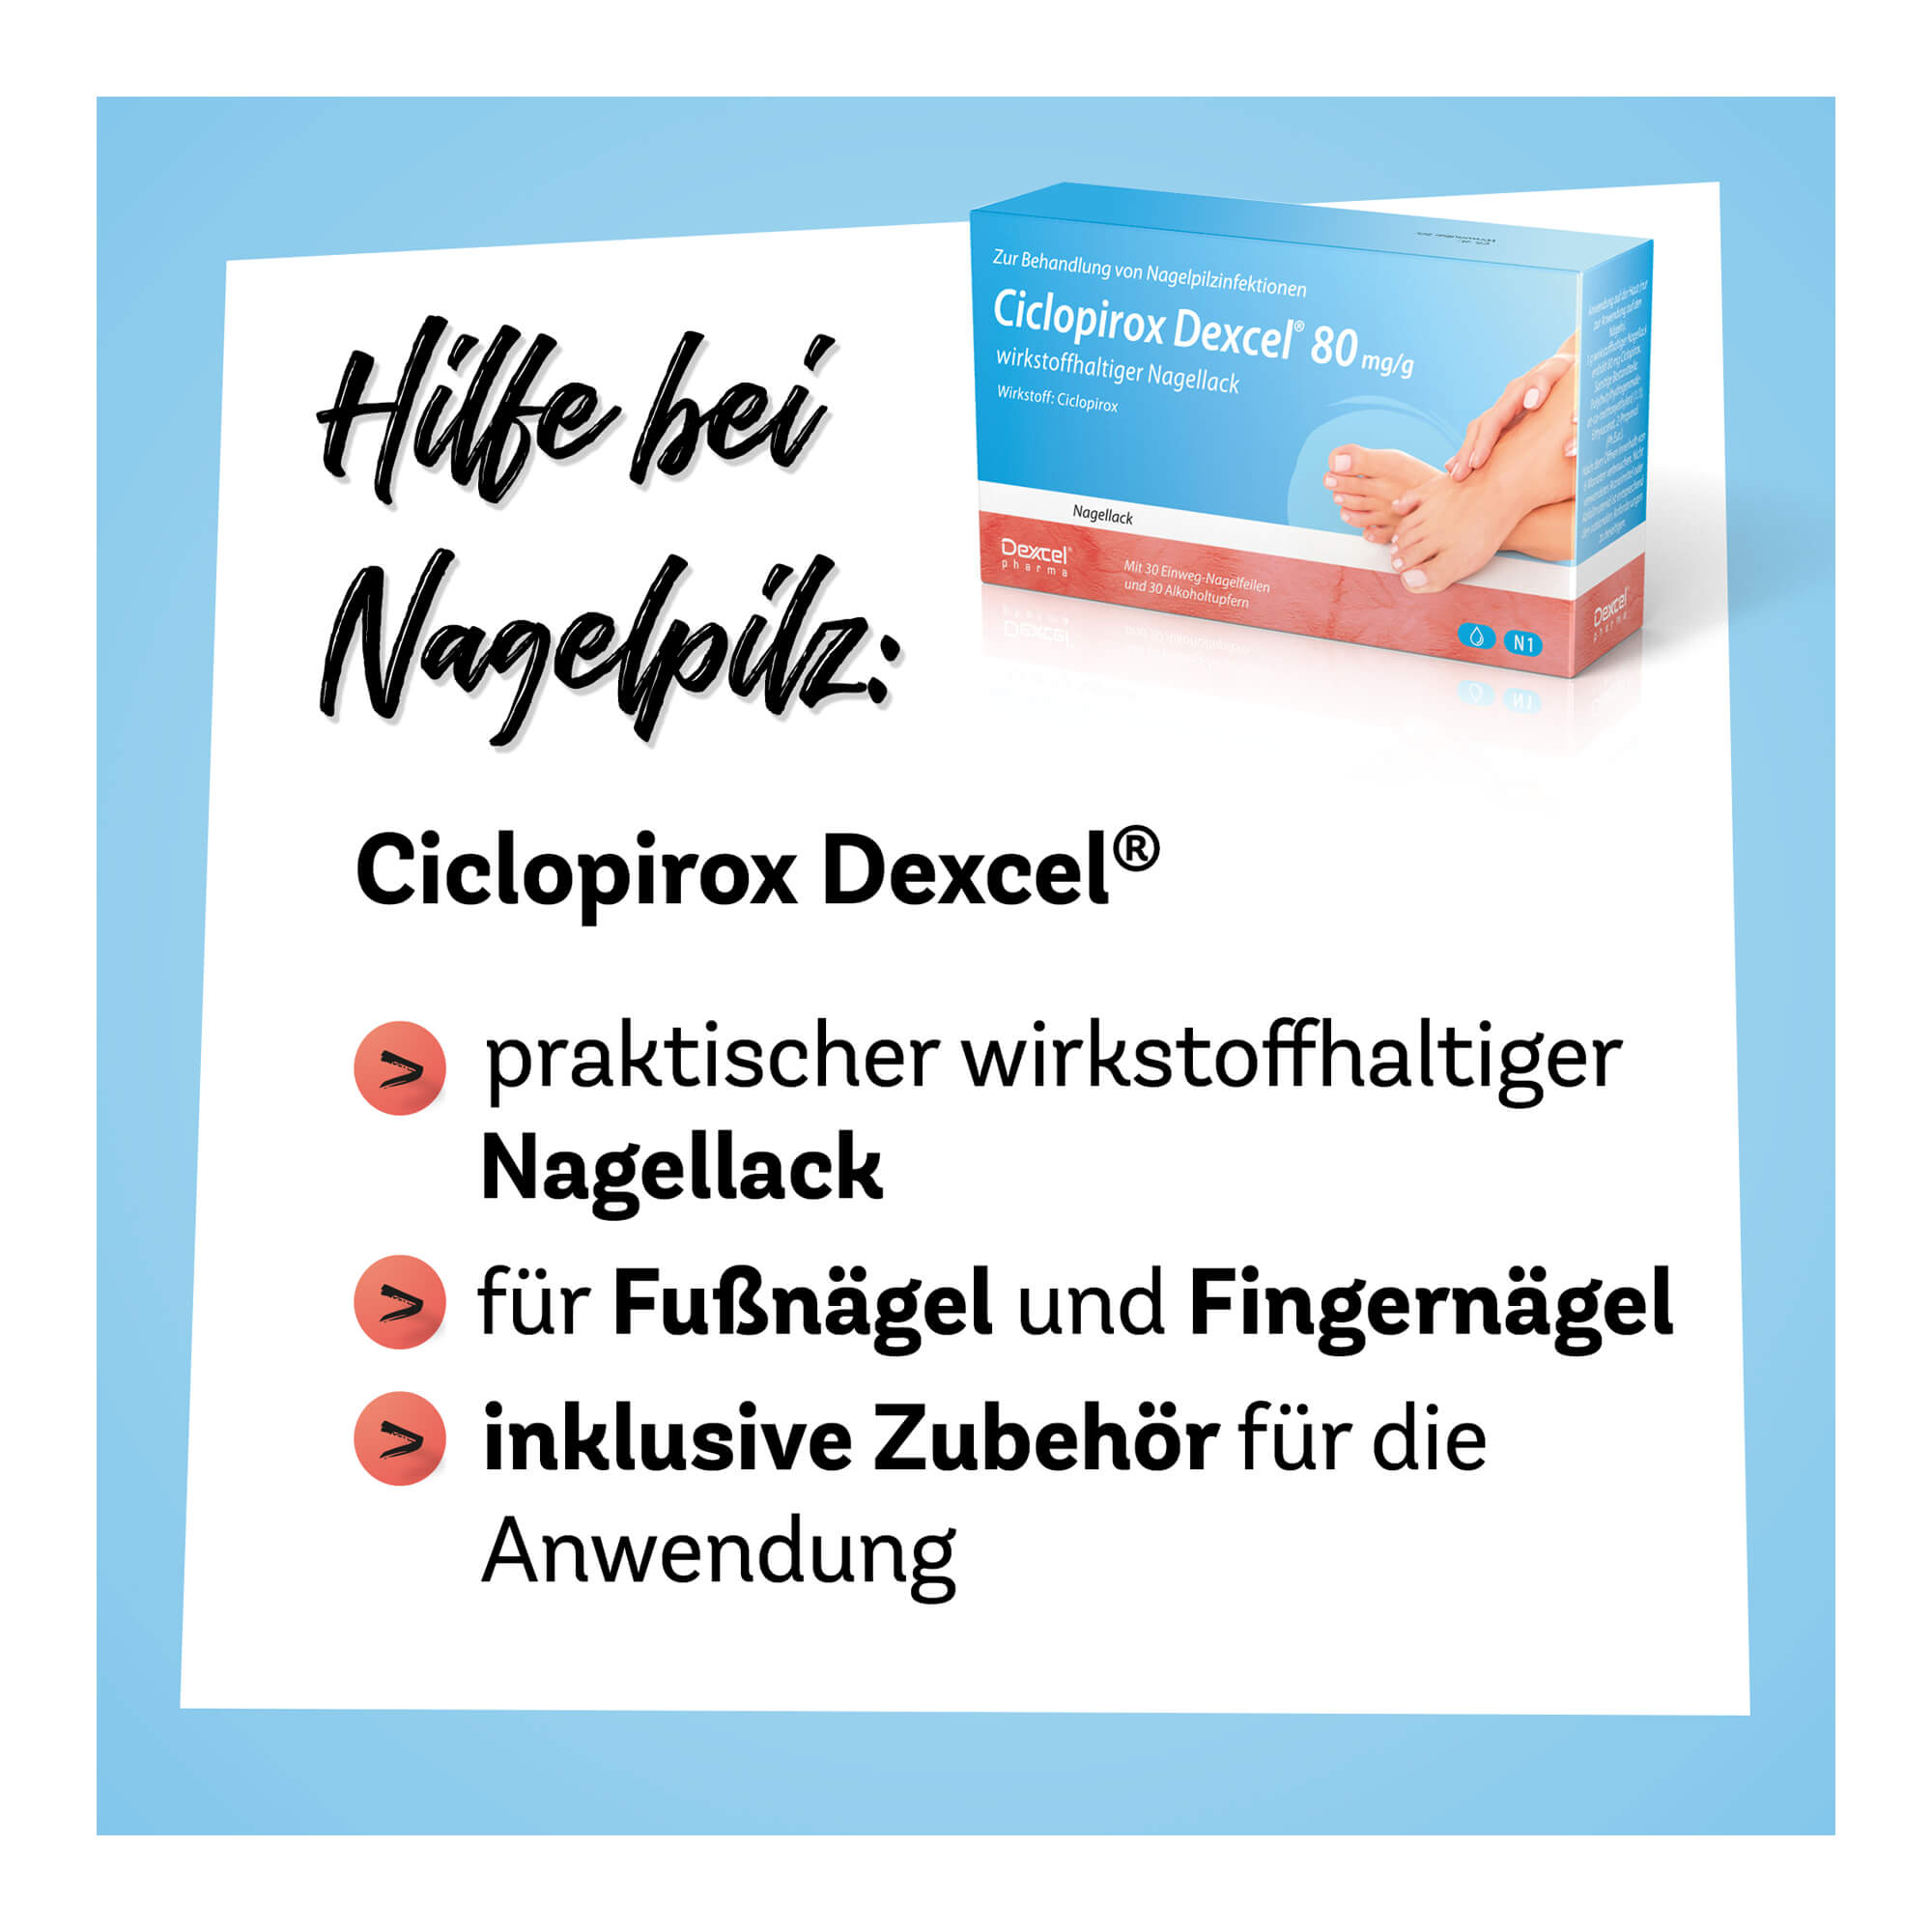 Ciclopirox Dexcel 80 mg/g wirkstoffhaltiger Nagellack